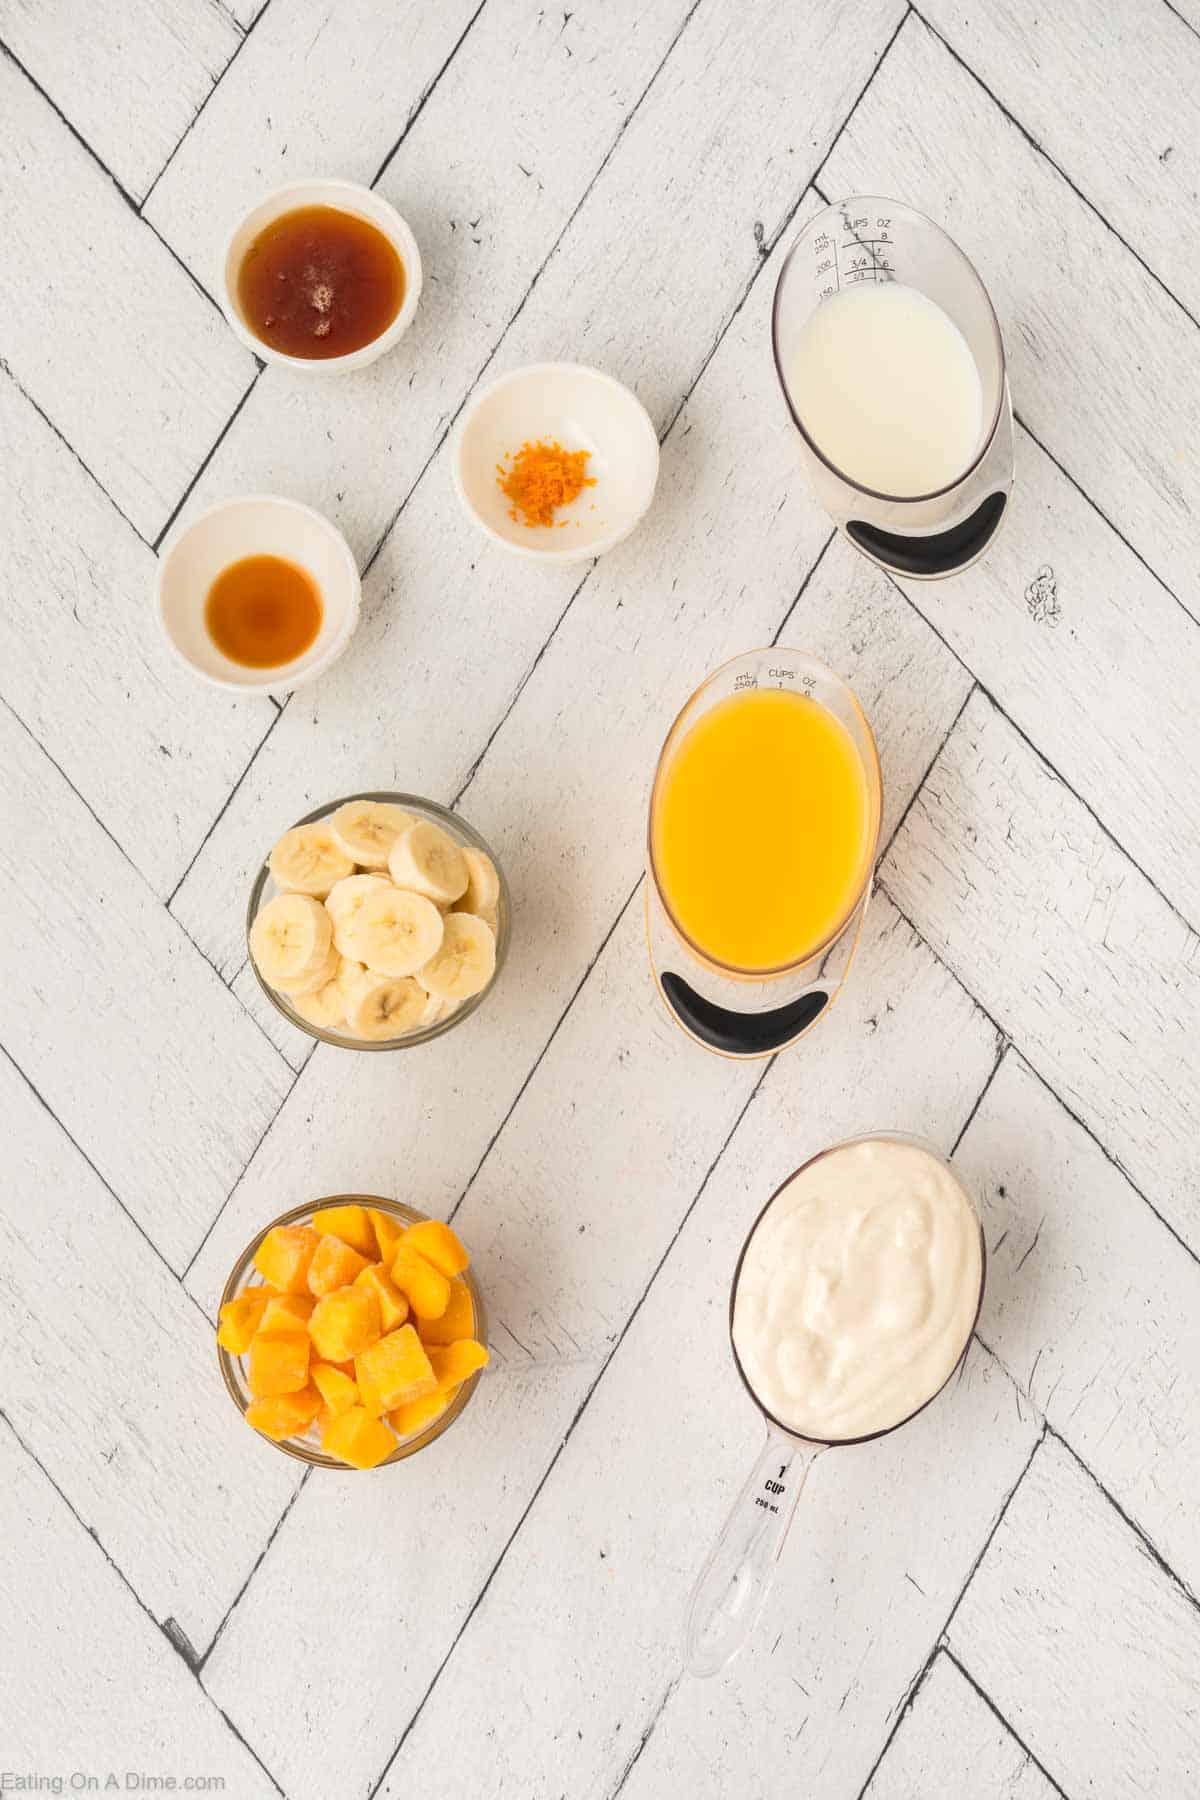 Ingredients - Vanilla Greek Yogurt, orange juice, frozen mango chunks, frozen banana slices, vanilla extract, orange zest, whole milk, honey